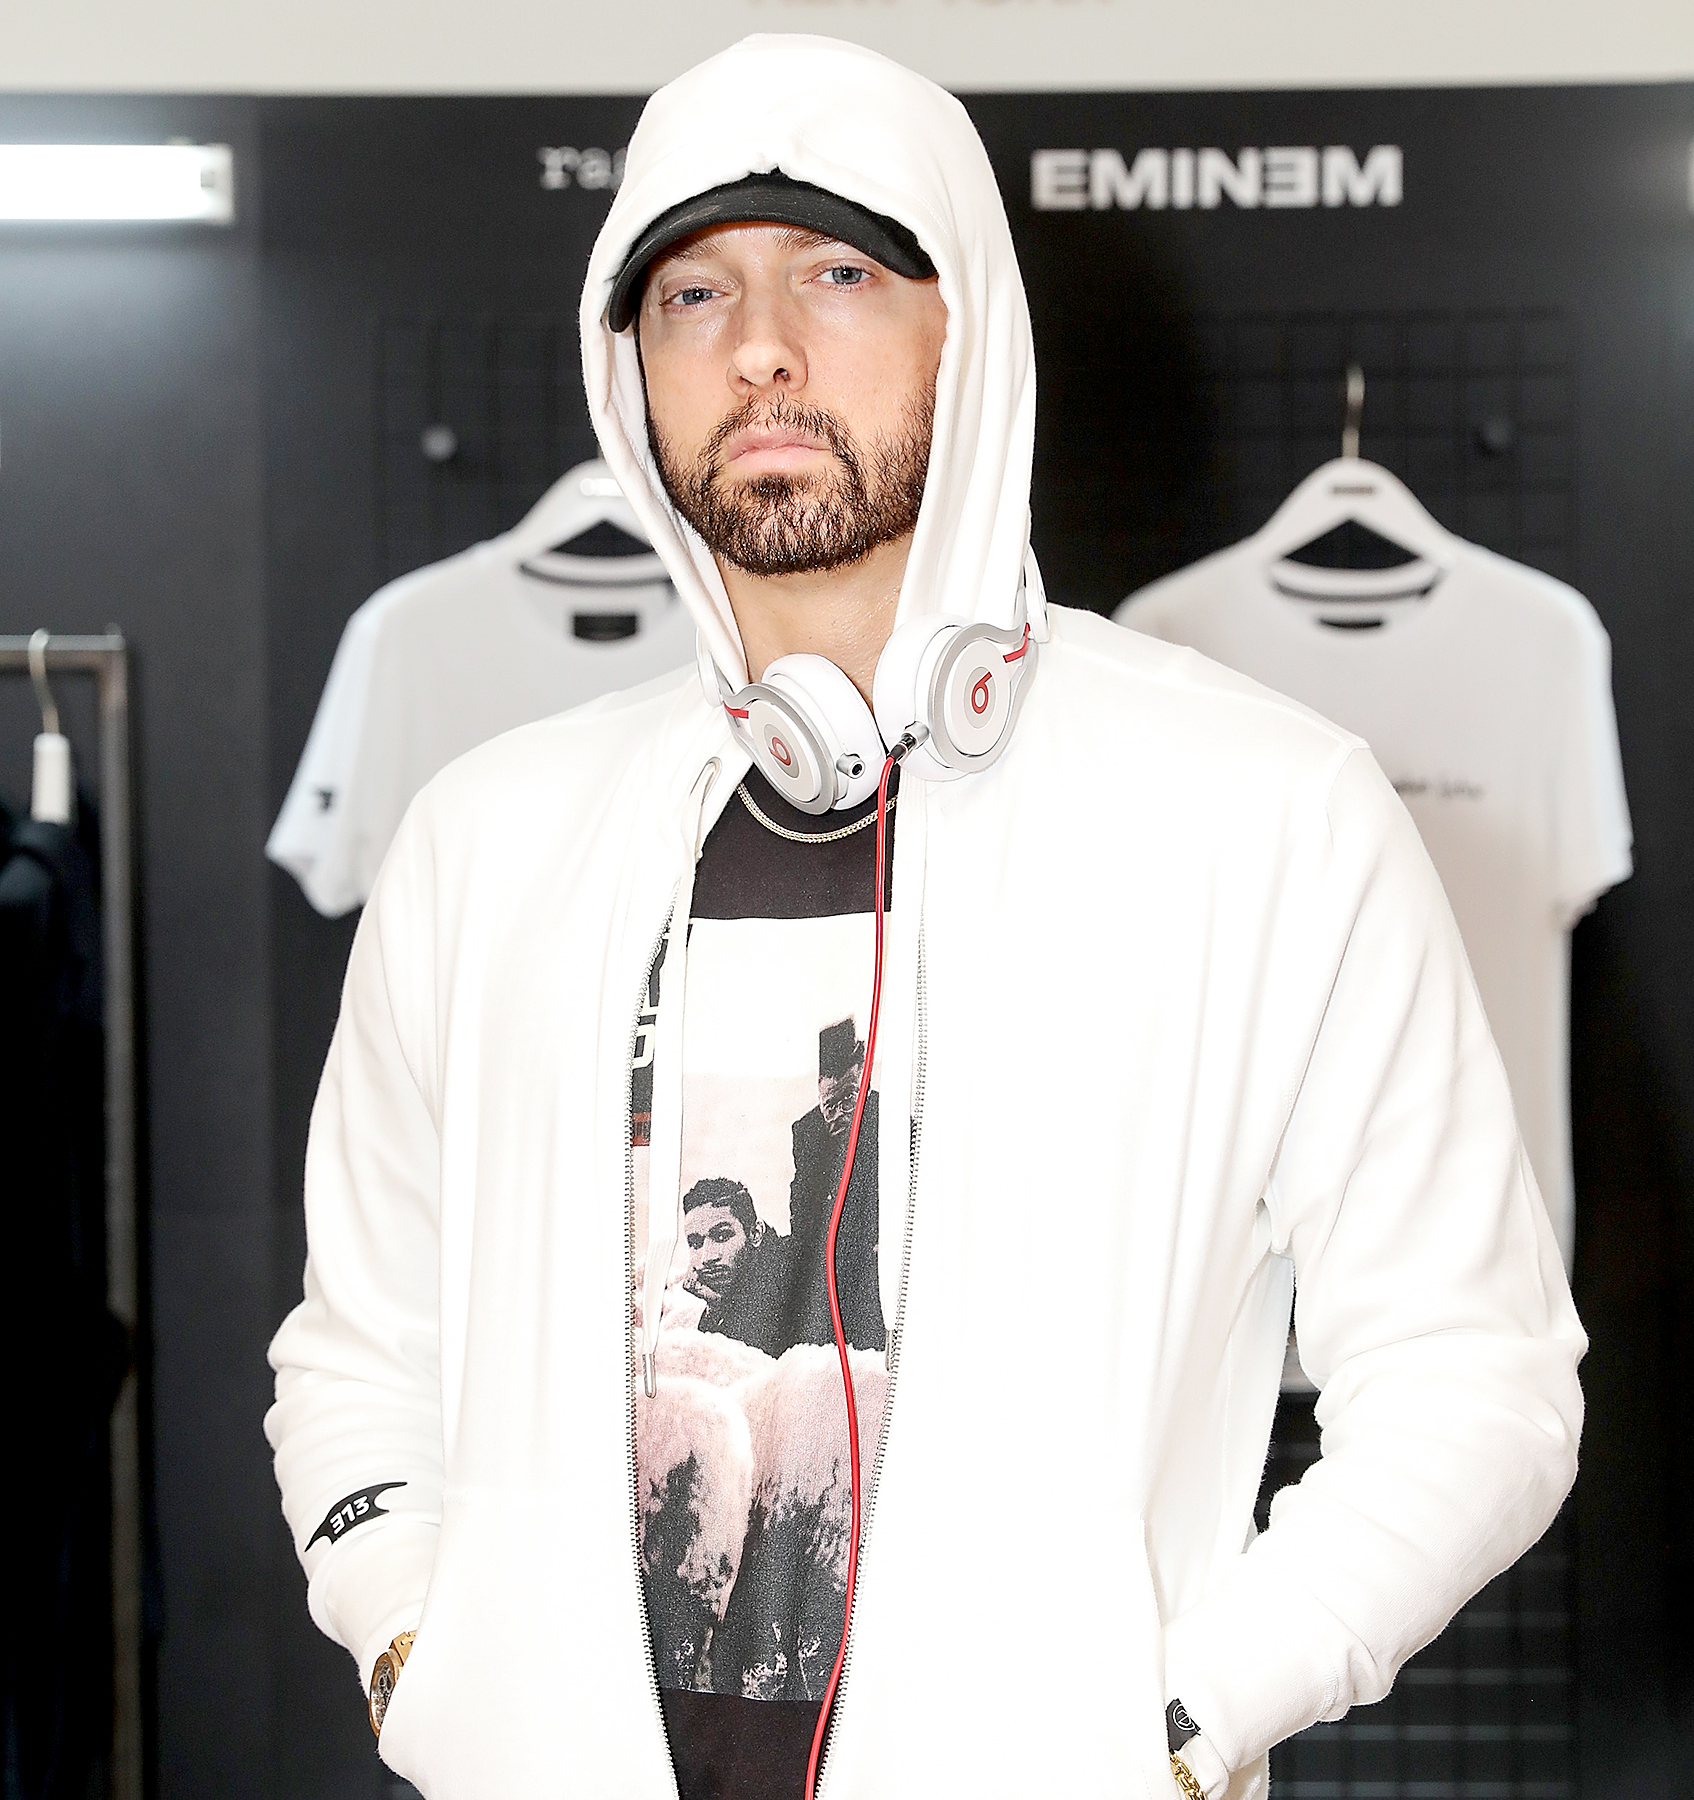 Eminem Apologizes for Using Homophobic Slur About Tyler, the Creator